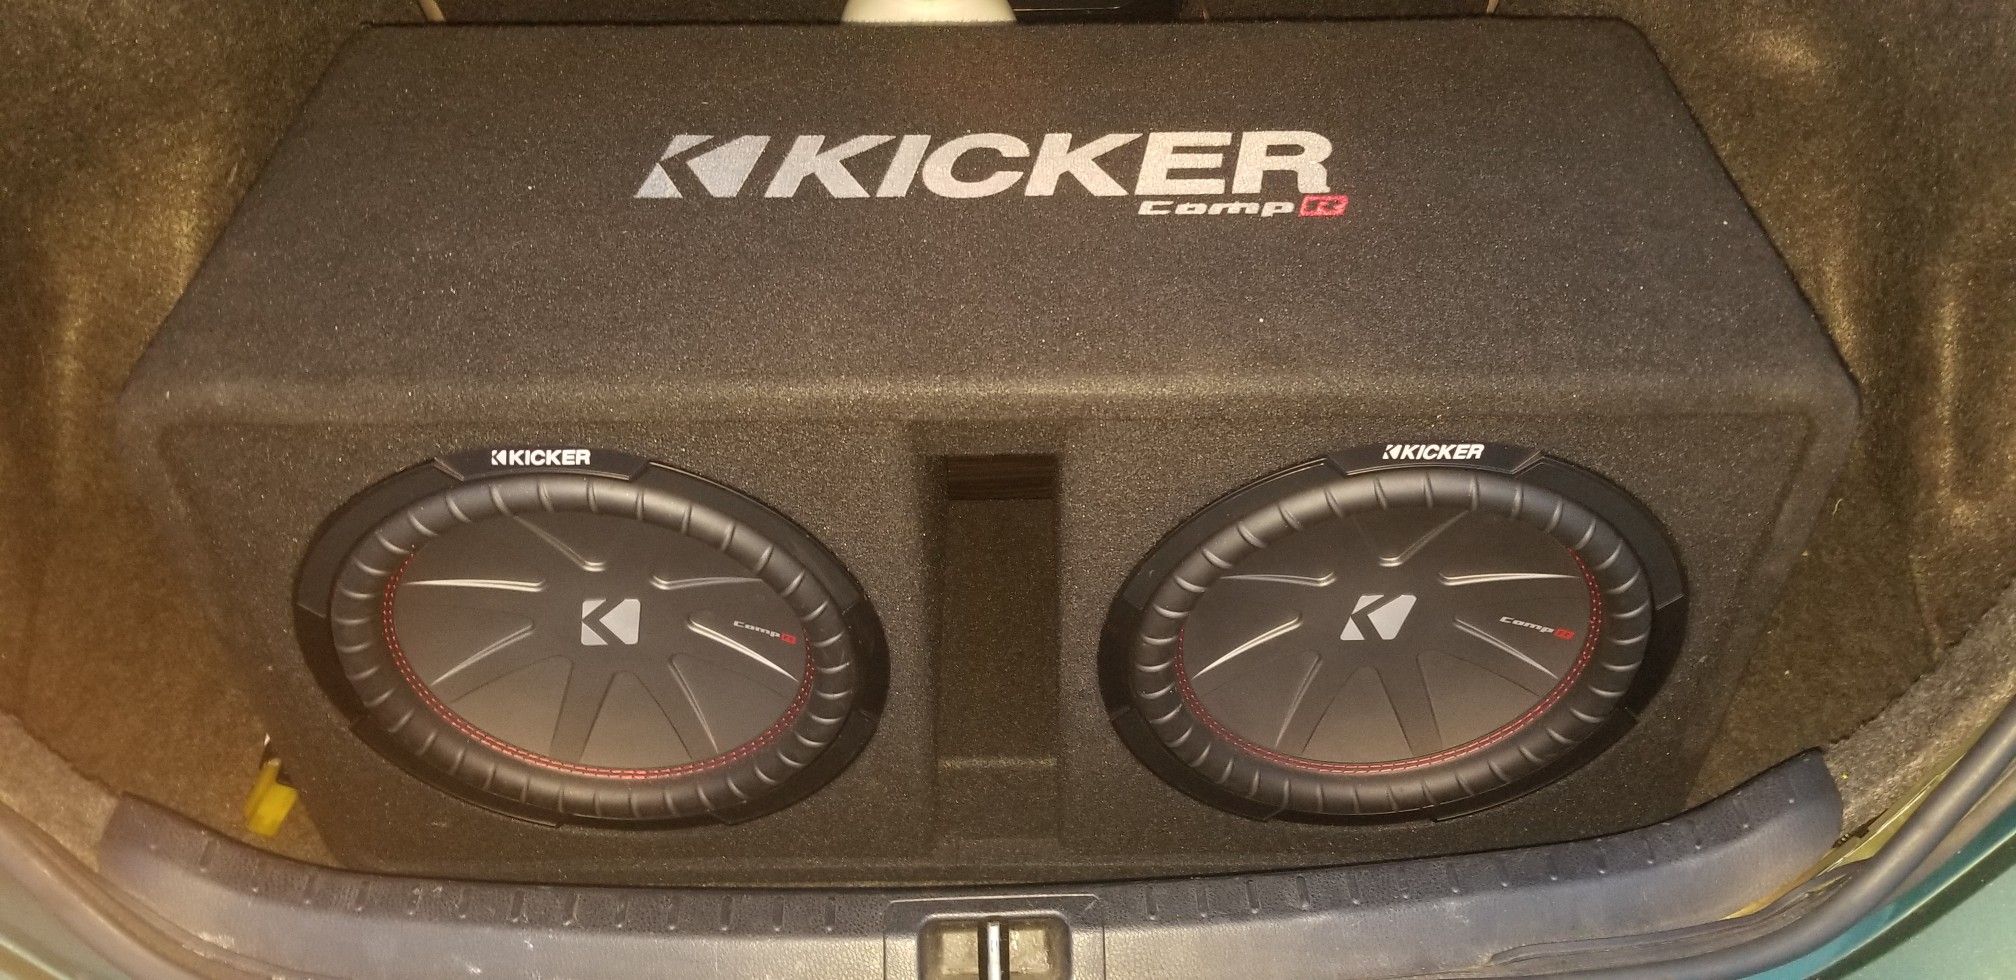 Kicker subwoofers 12inch and 1600 watt pioneer amp